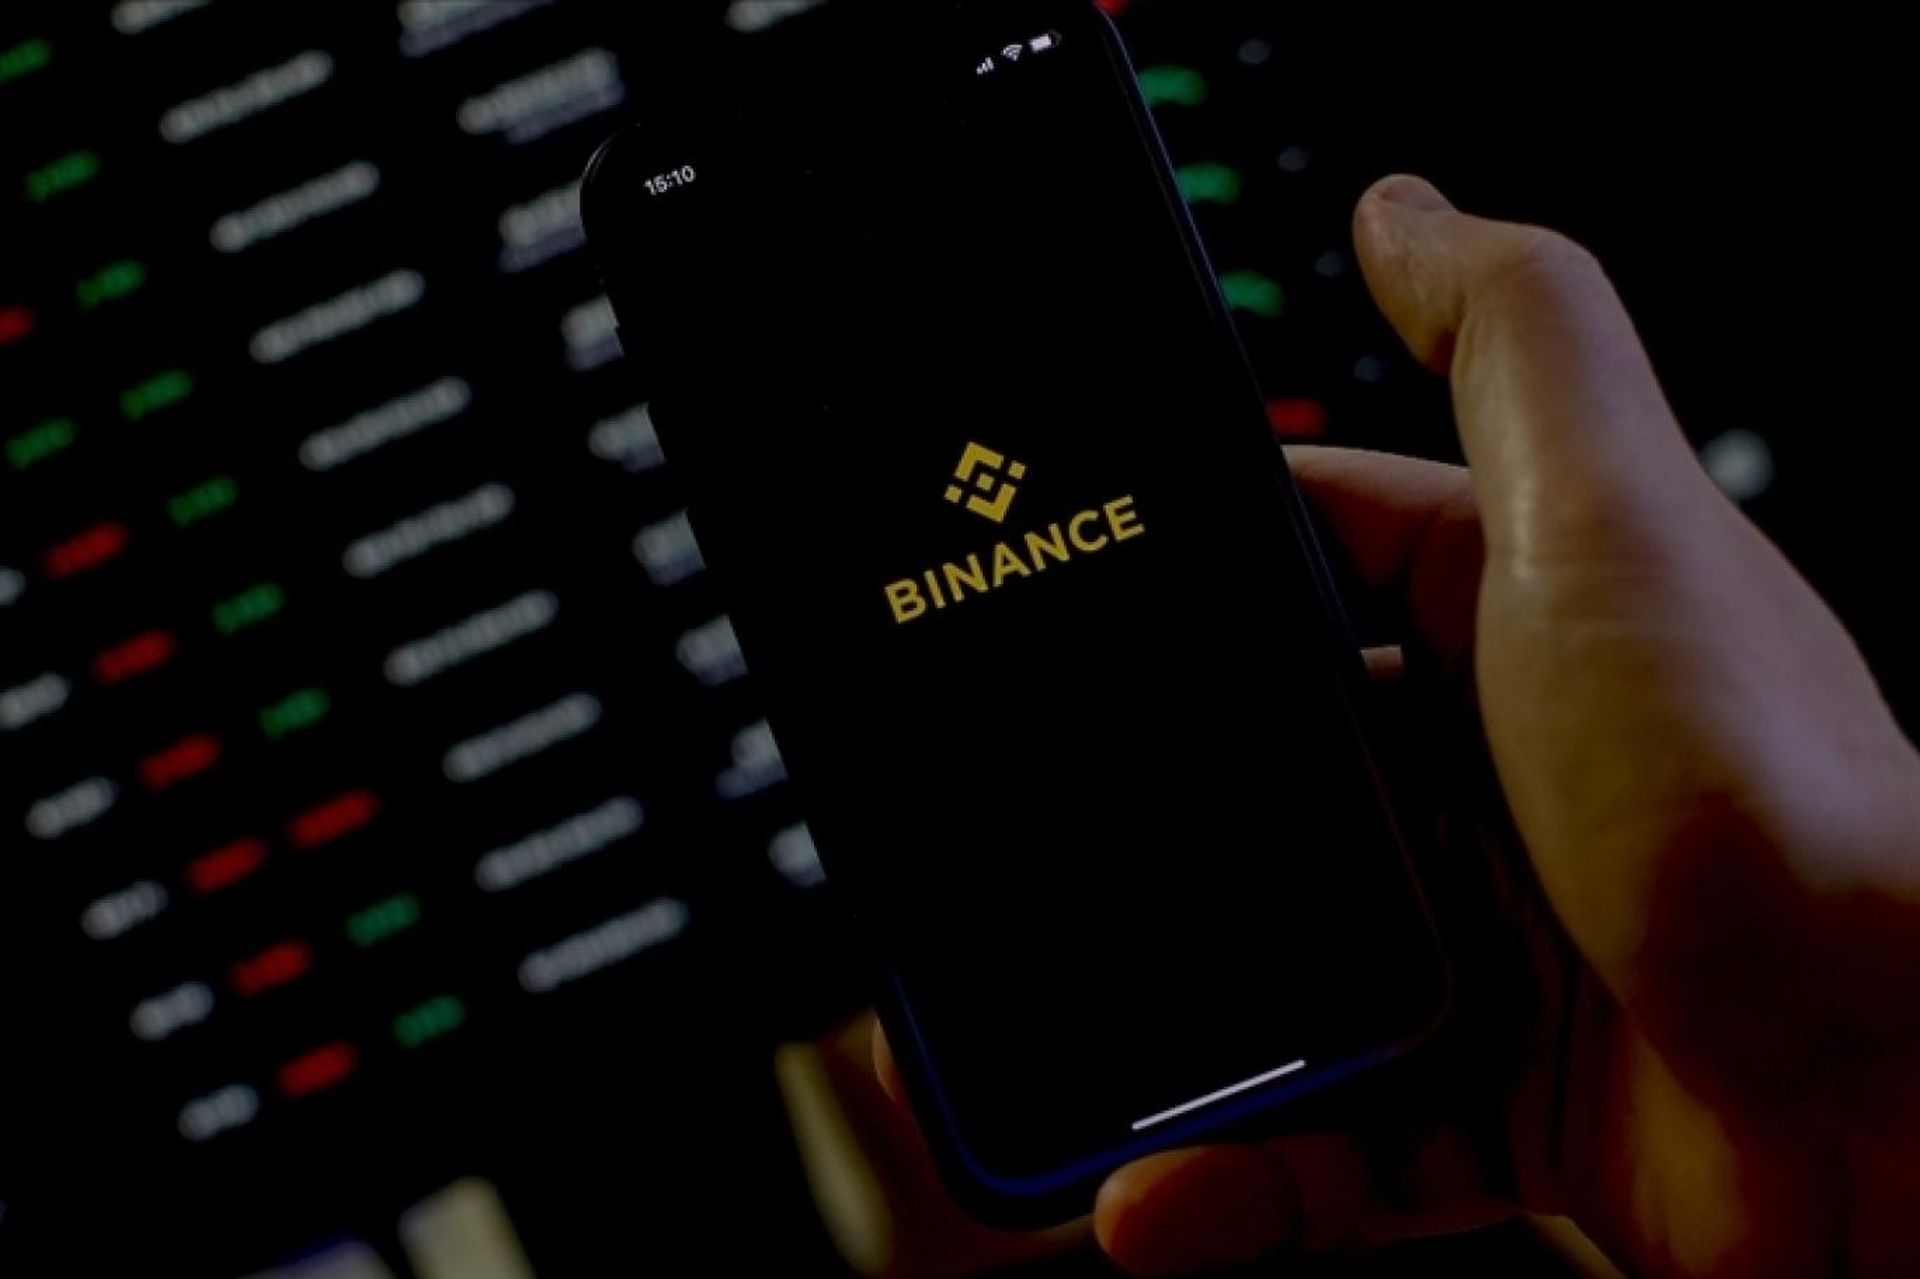 Binance mobile app